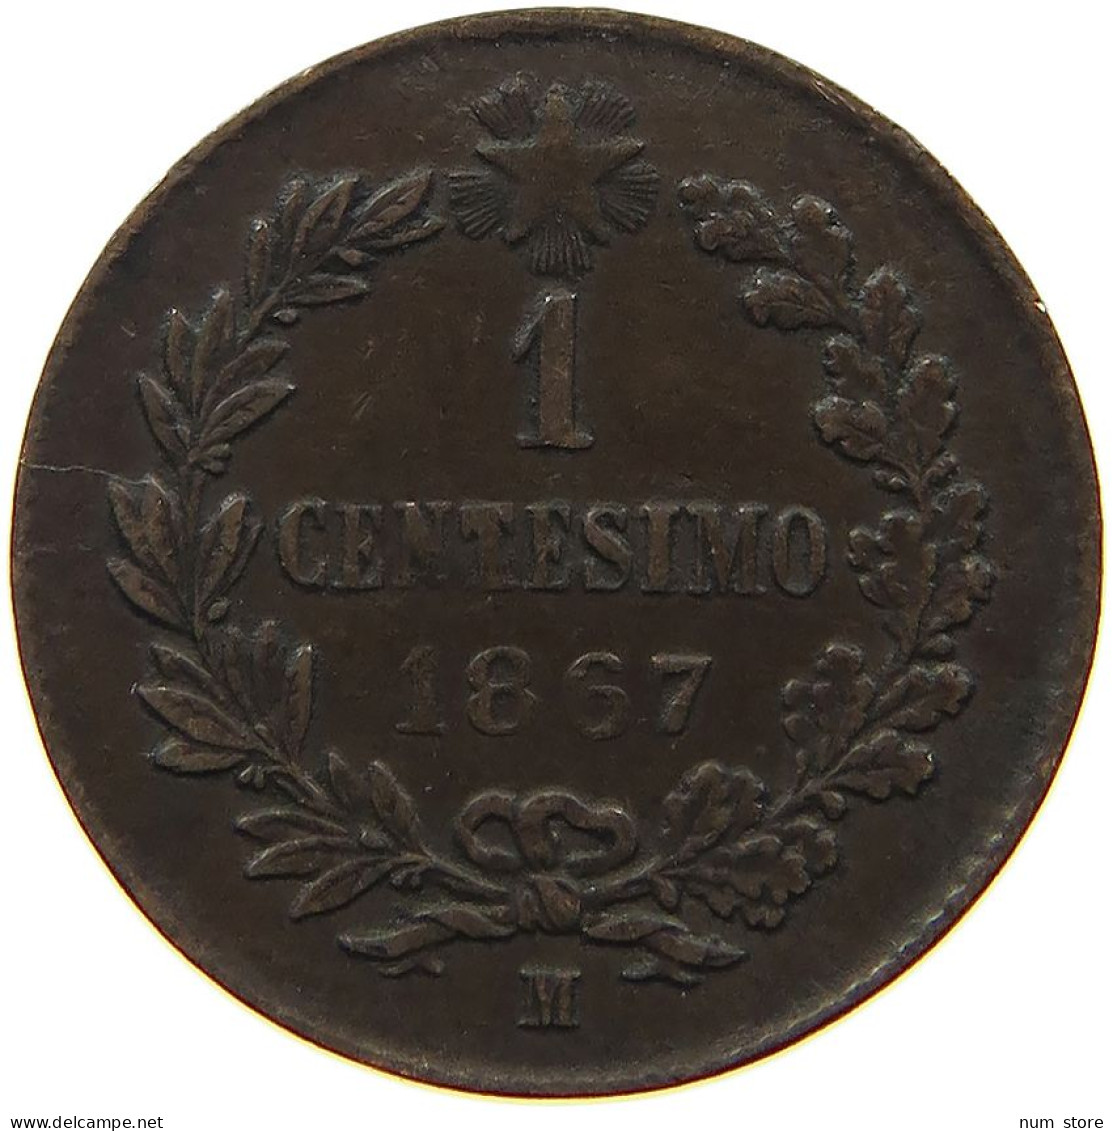 ITALY CENTESIMO 1867 M Vittorio Emanuele II. 1861 - 1878 #a094 0023 - 1861-1878 : Vittoro Emanuele II